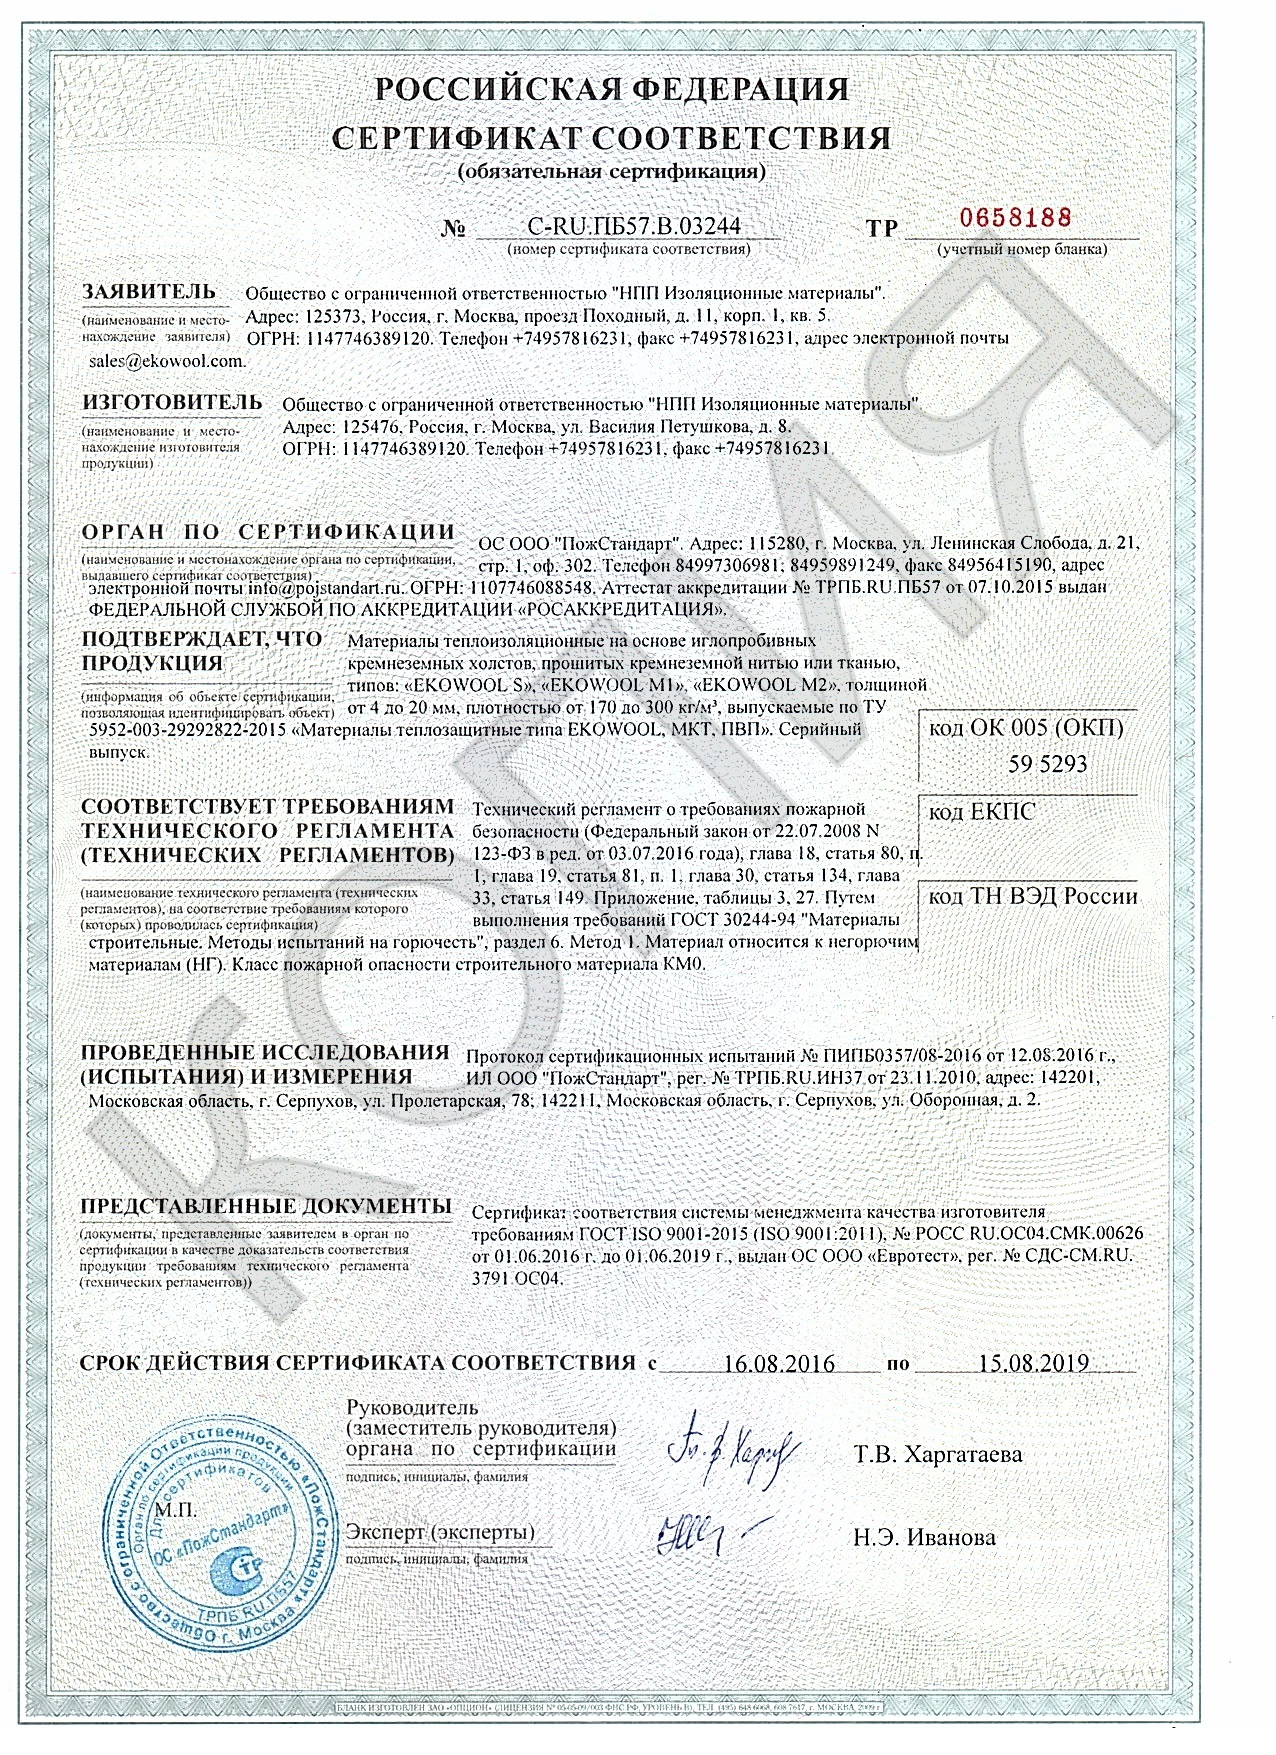 сертификат эковул кремнеземные маты